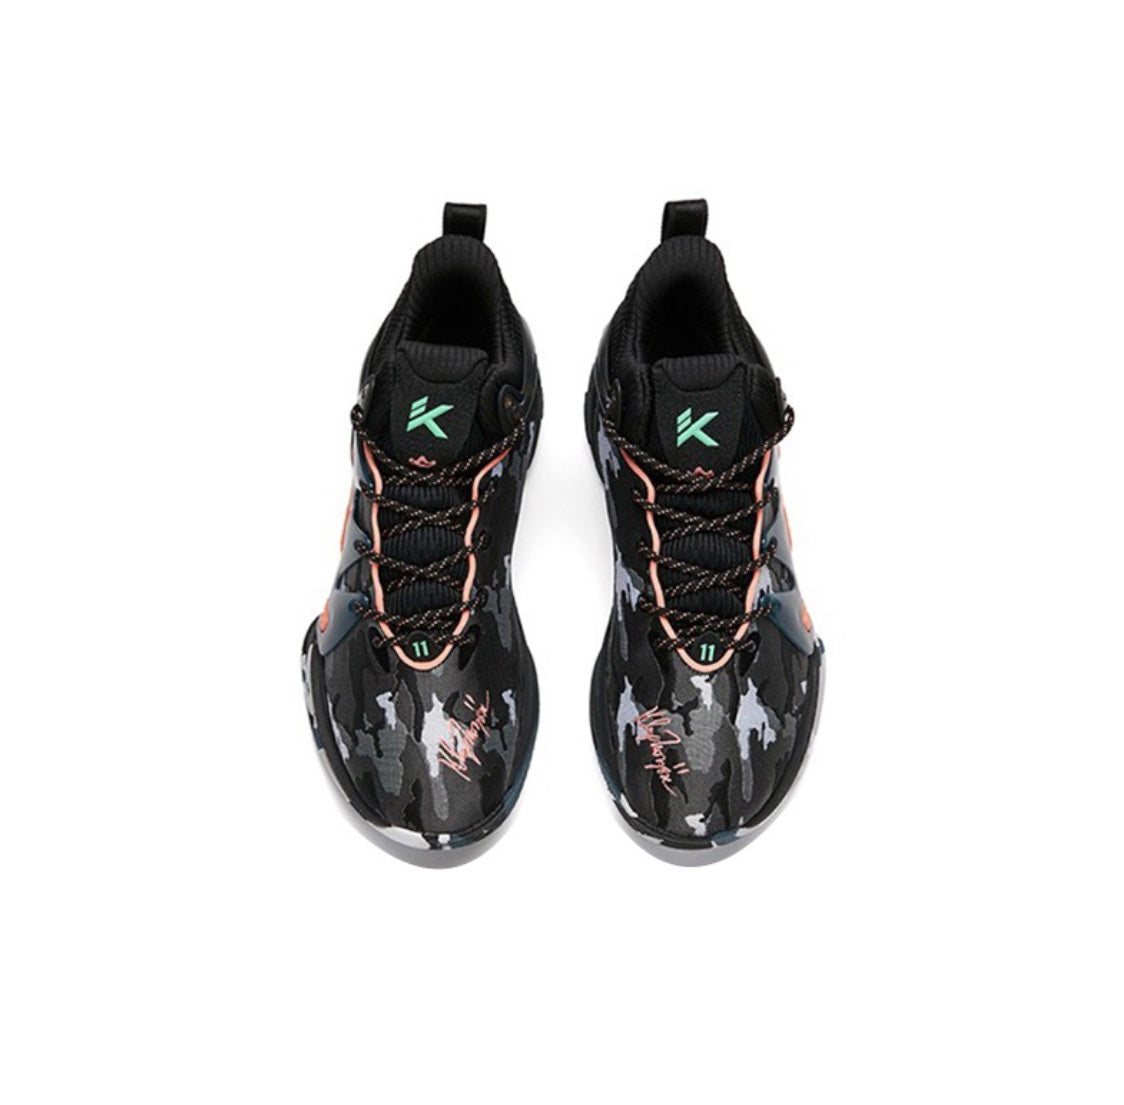 Anta Men's KT "The Mountain 1.0" Low Actual Basketball Shoes - Black/White/Gray